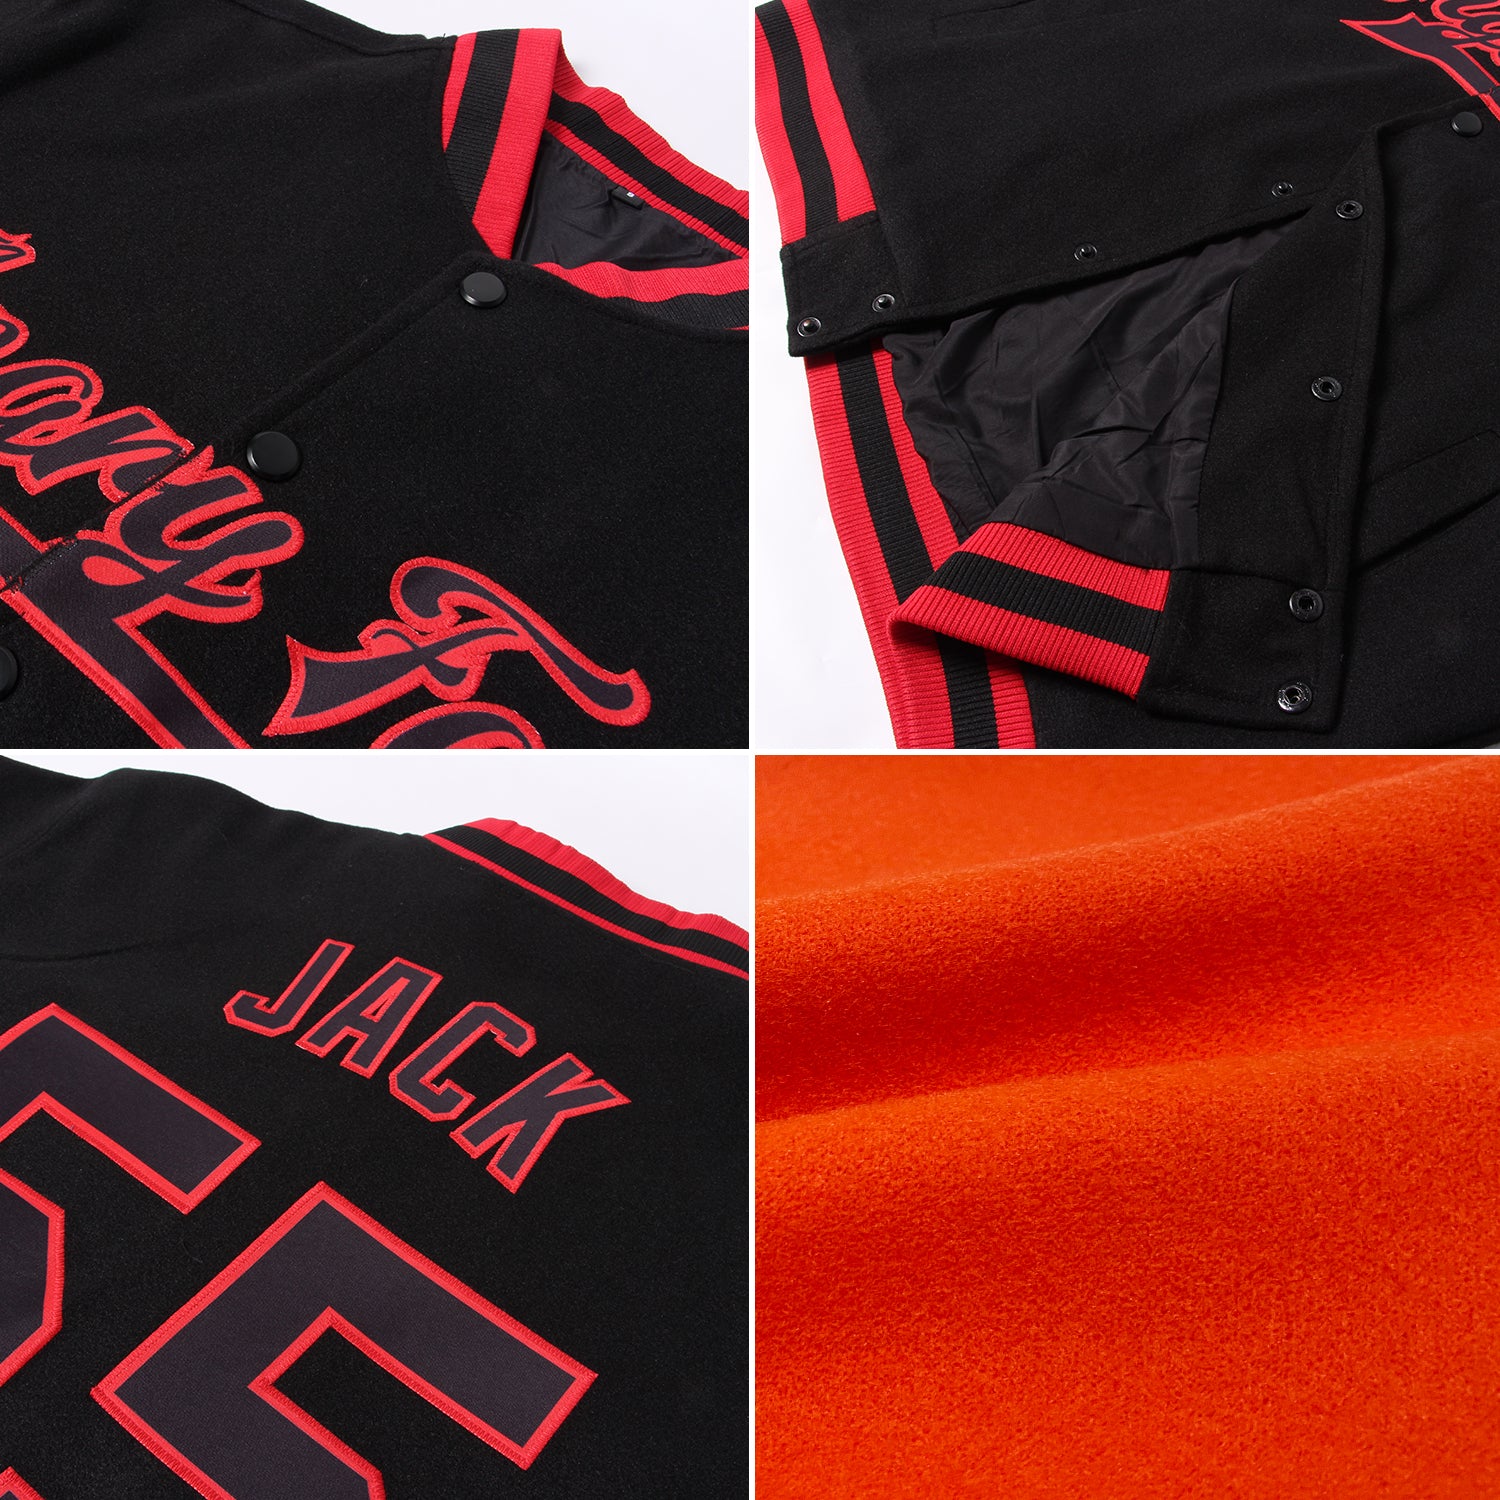 Chicago Bulls Starter Youth Raglan Full-Snap Varsity Jacket - Red